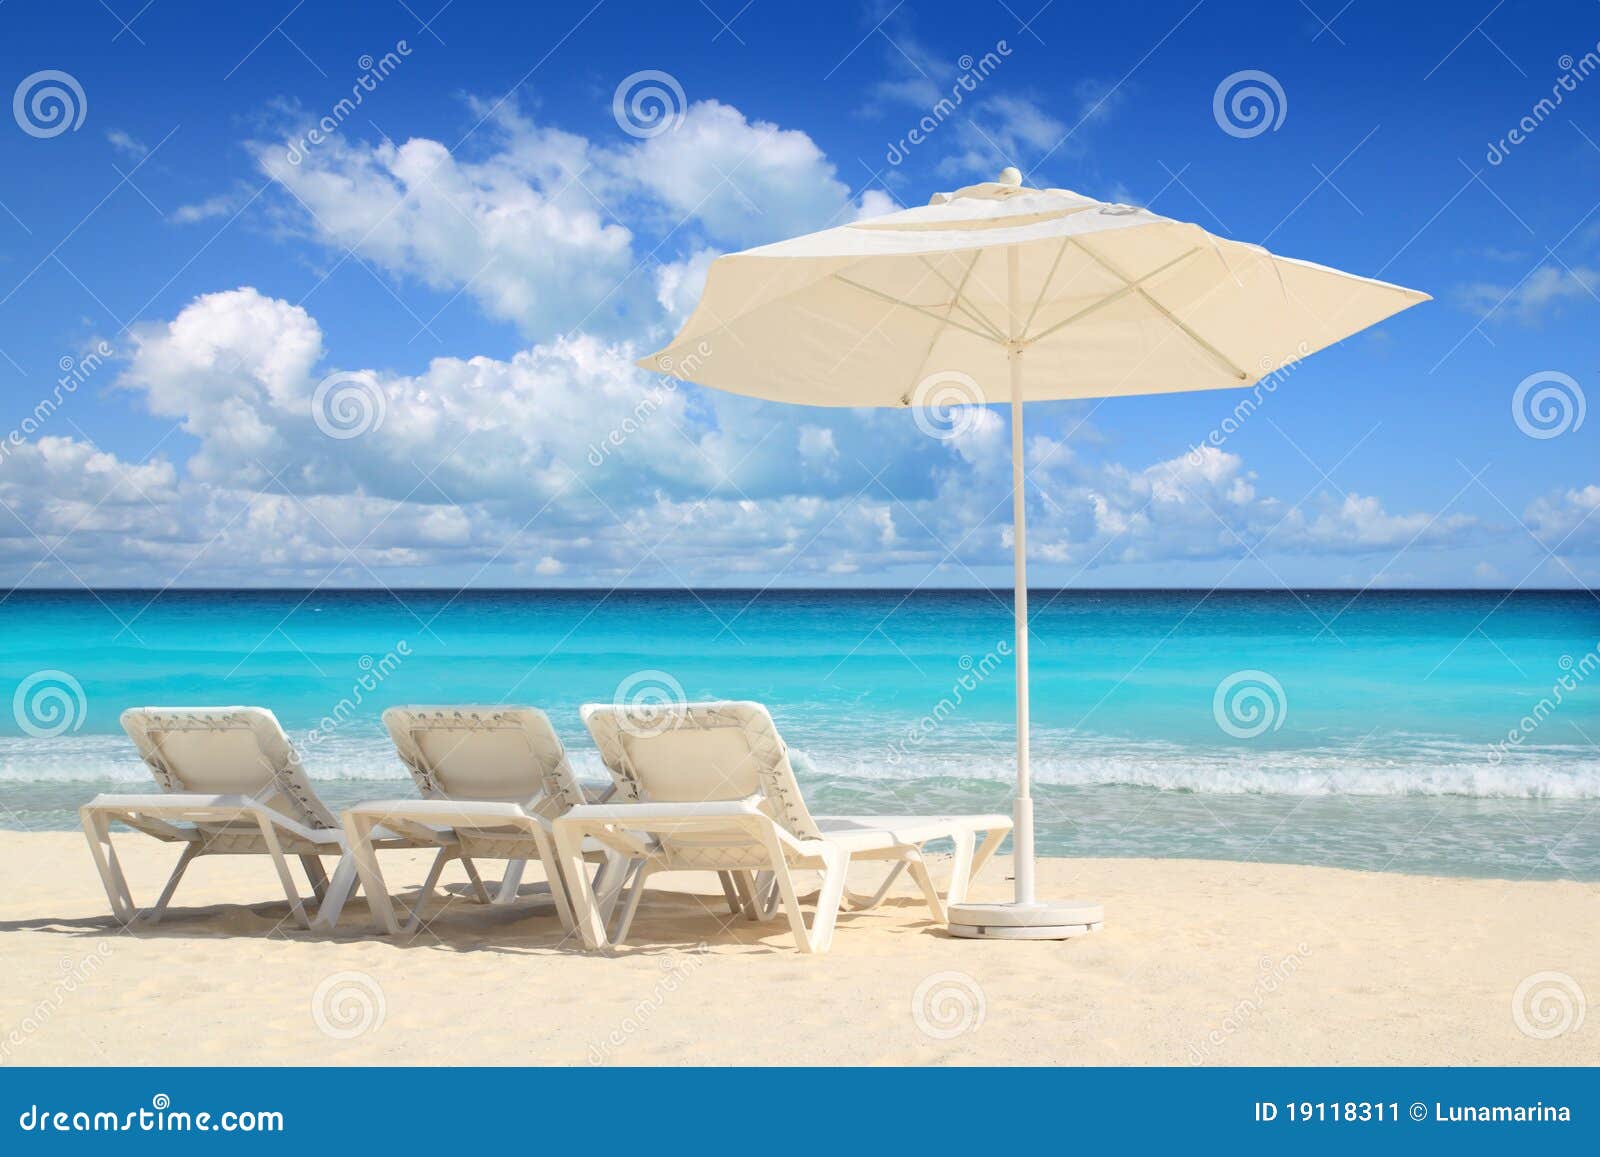 caribbean beach parasol white umbrella hammocks